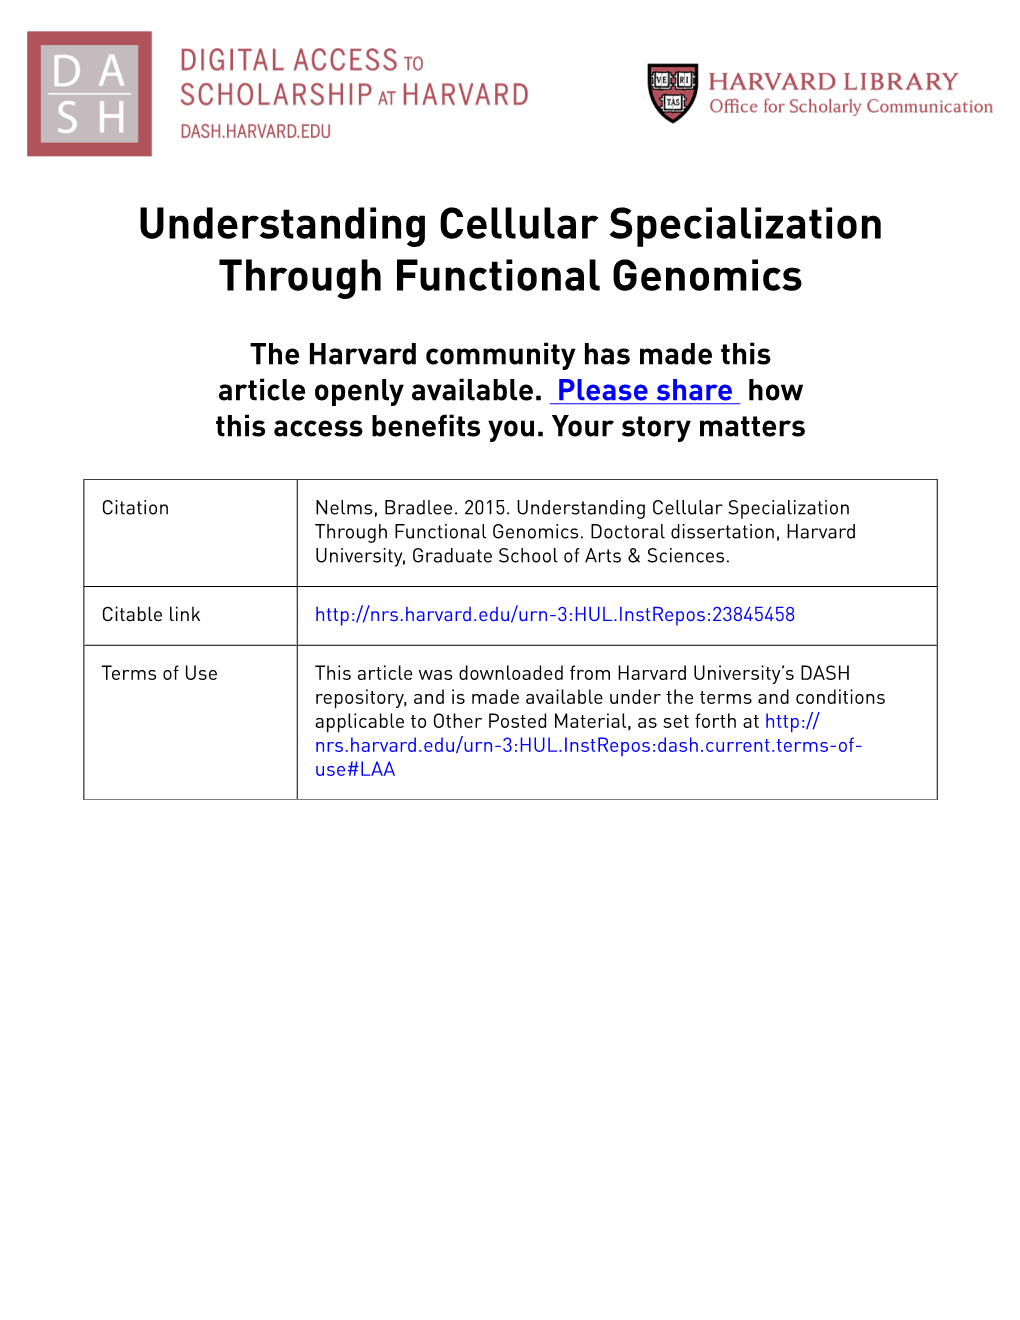 Understanding Cellular Specialization Through Functional Genomics